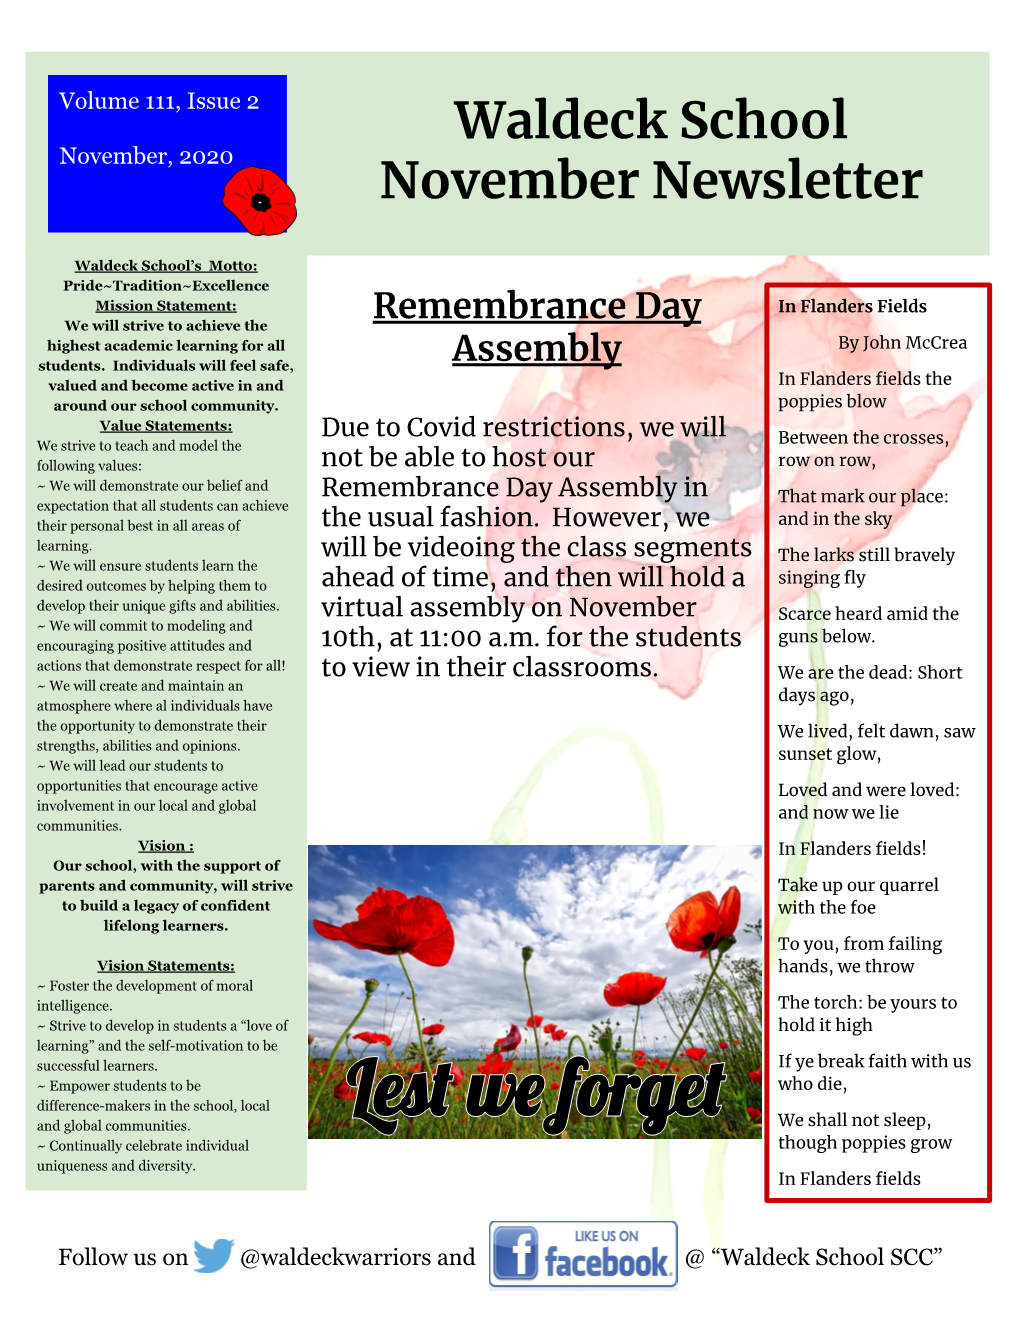 Waldeck School November Newsletter